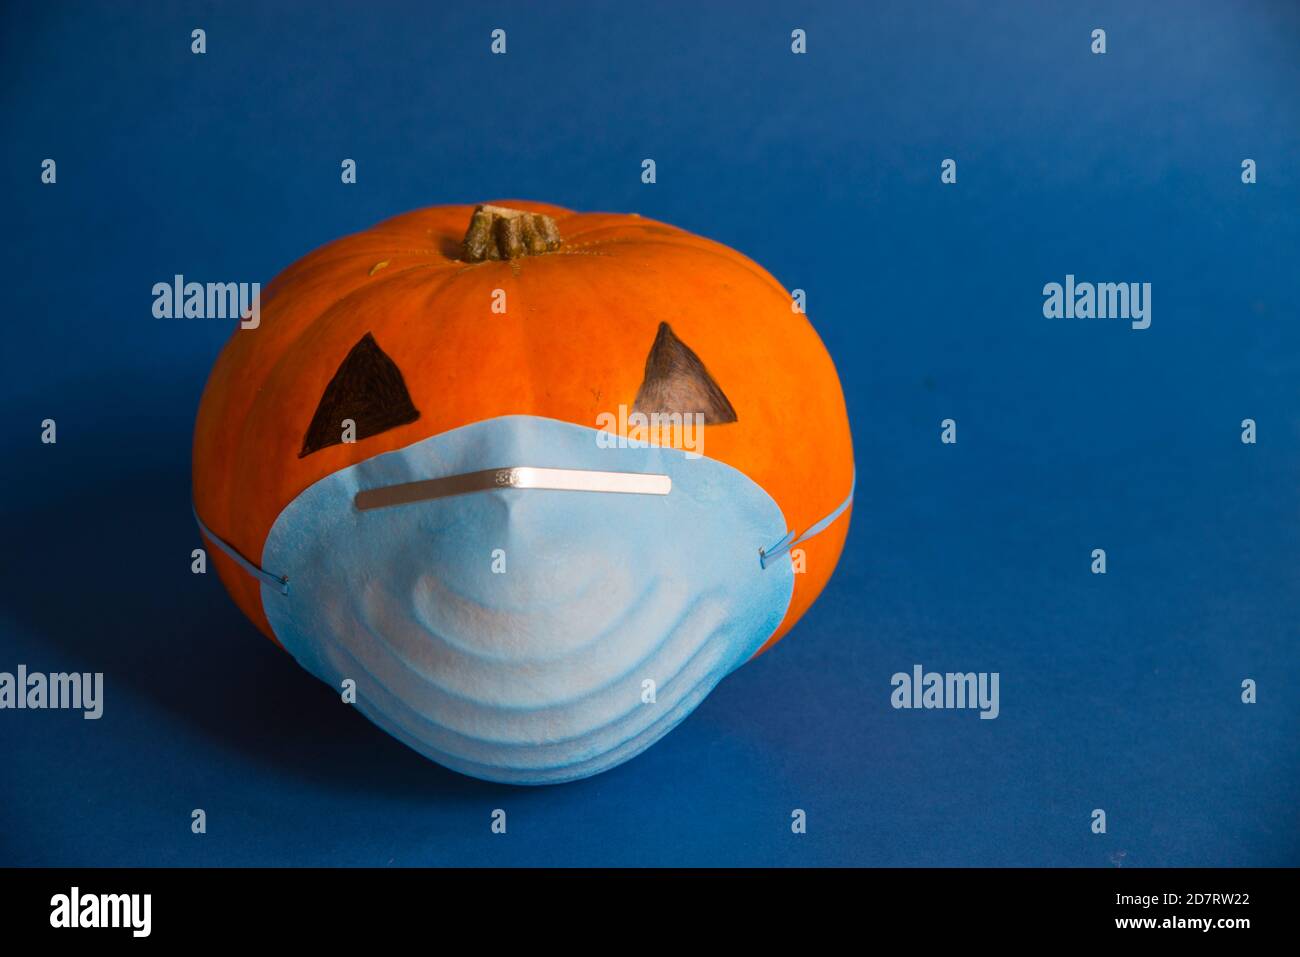 Covid pandemics: Halloween pumpkin wearing mask. Stock Photo